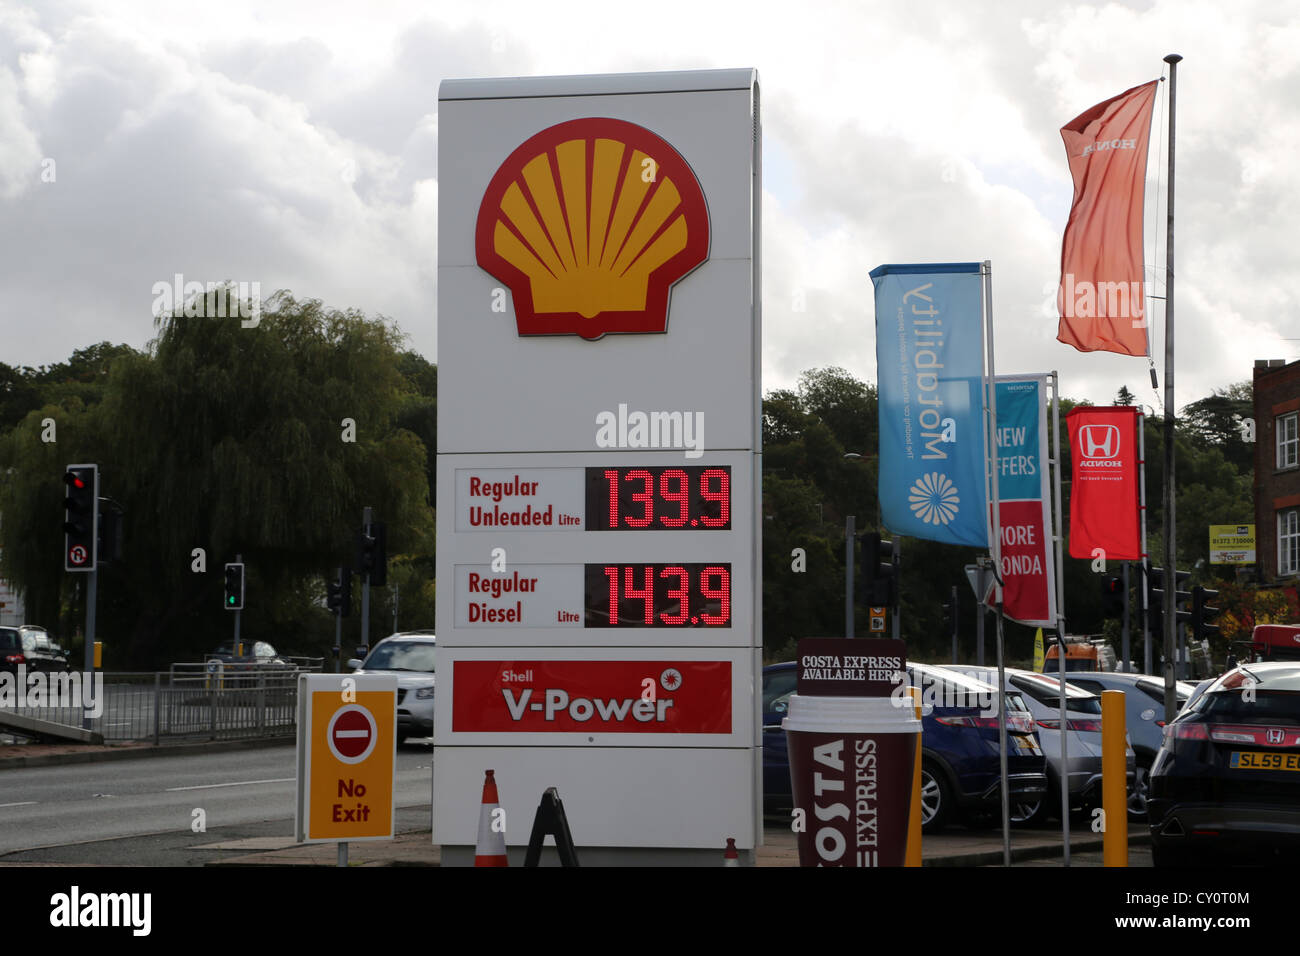 Shell Petrol Station Sign V-Power Regular Unleaded And Regular Diesel Prices Ewell England Stock Photo